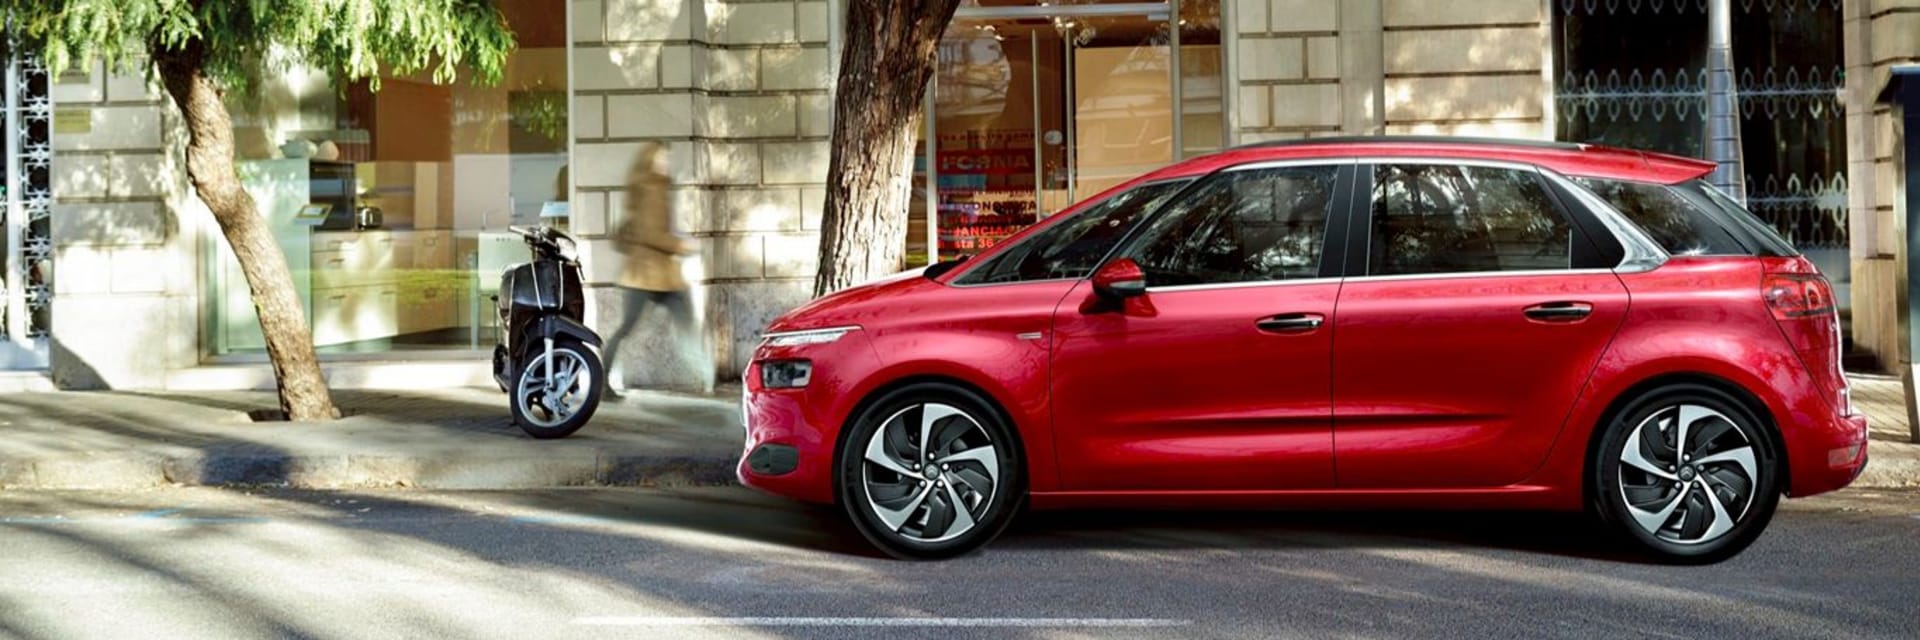 Citroën New Car Offers 